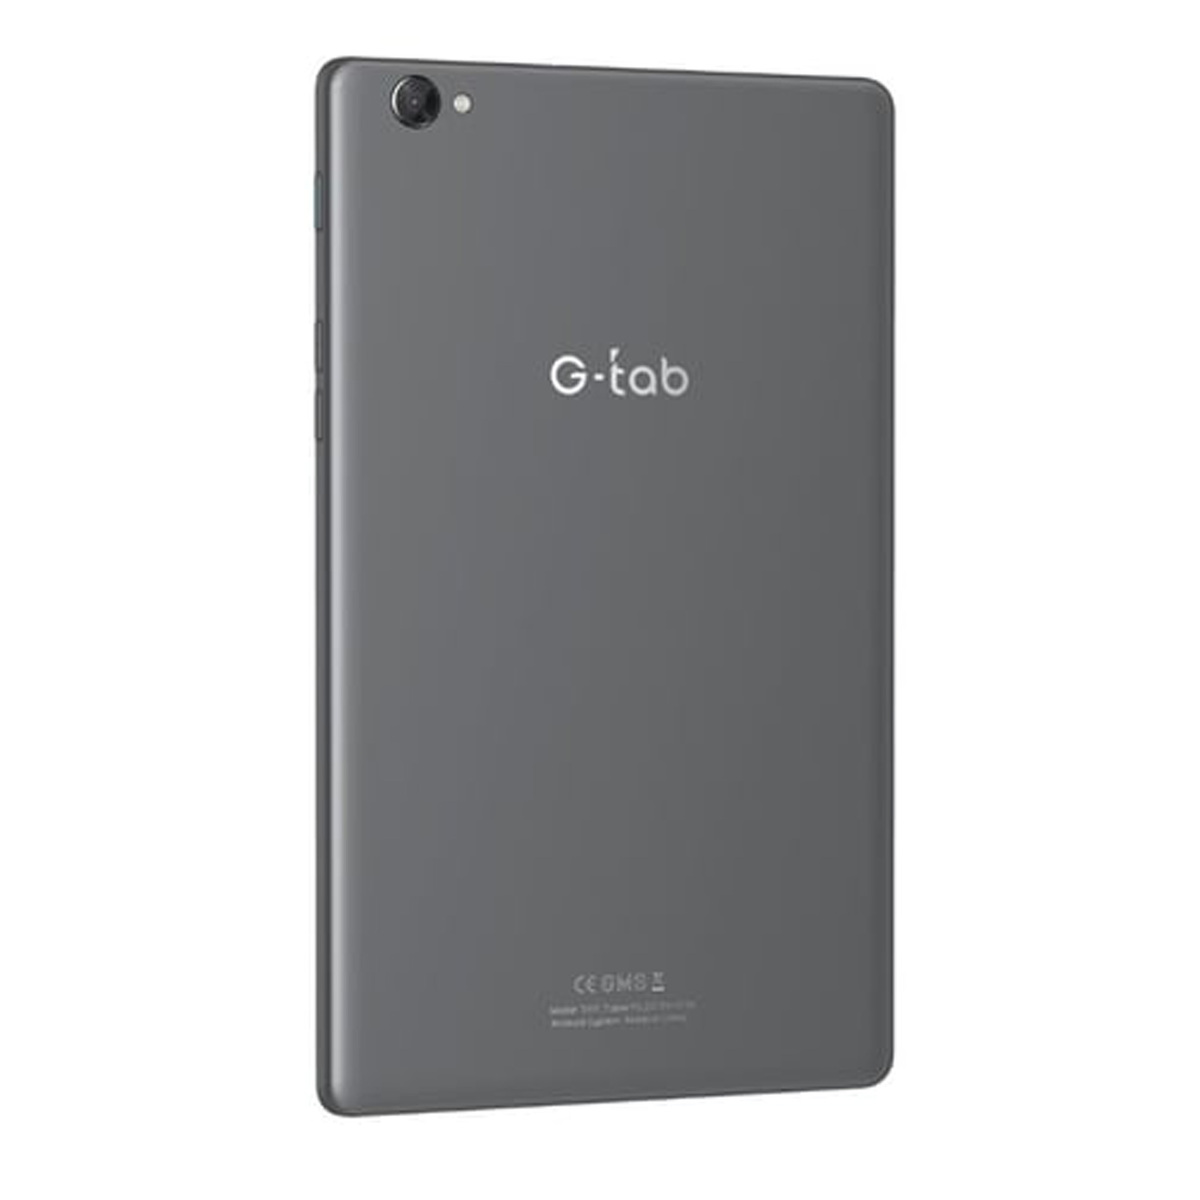 Gtab S8X 4G Tablet, 8 inches Display, 3 GB RAM, 32 GB STORAGE, Gray